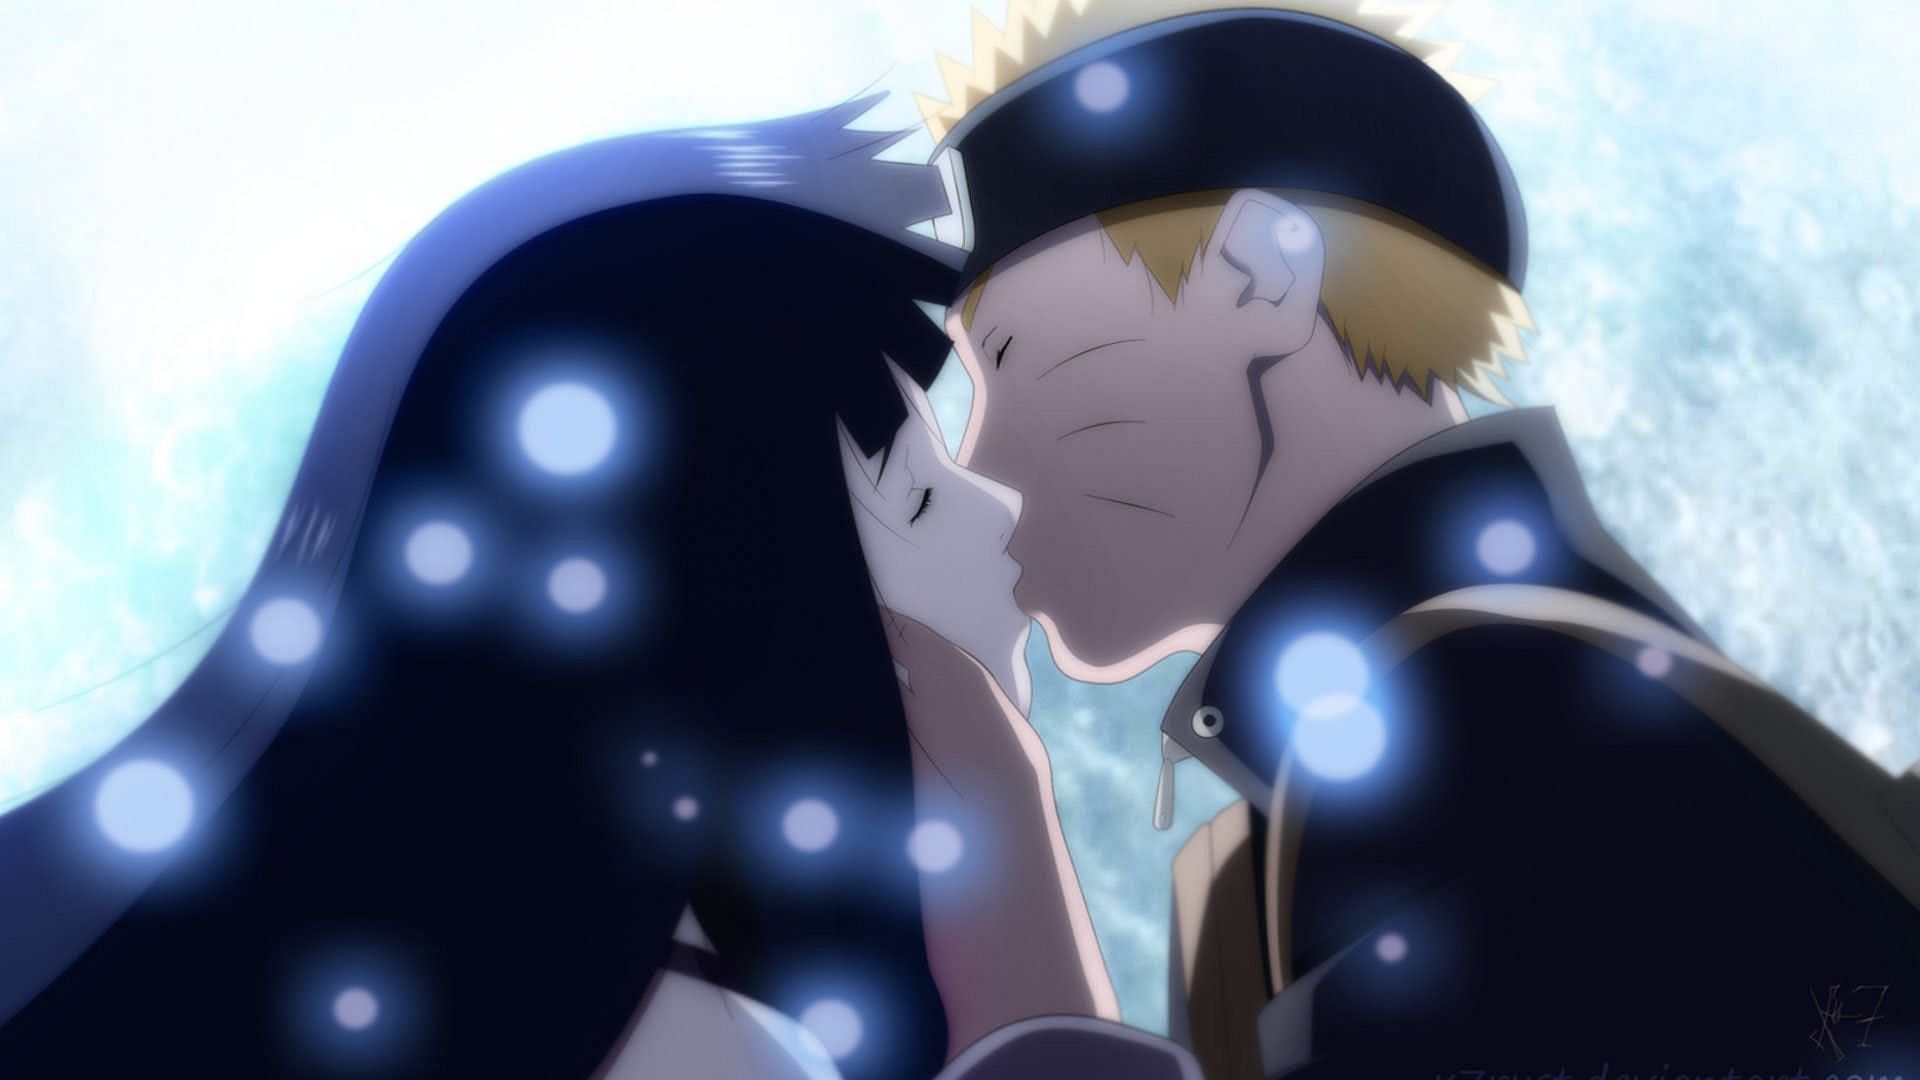 Hinata loved Naruto uncondionally (Image via Masashi Kishimoto/Shueisha, Viz Media, The Last: Naruto the Movie)